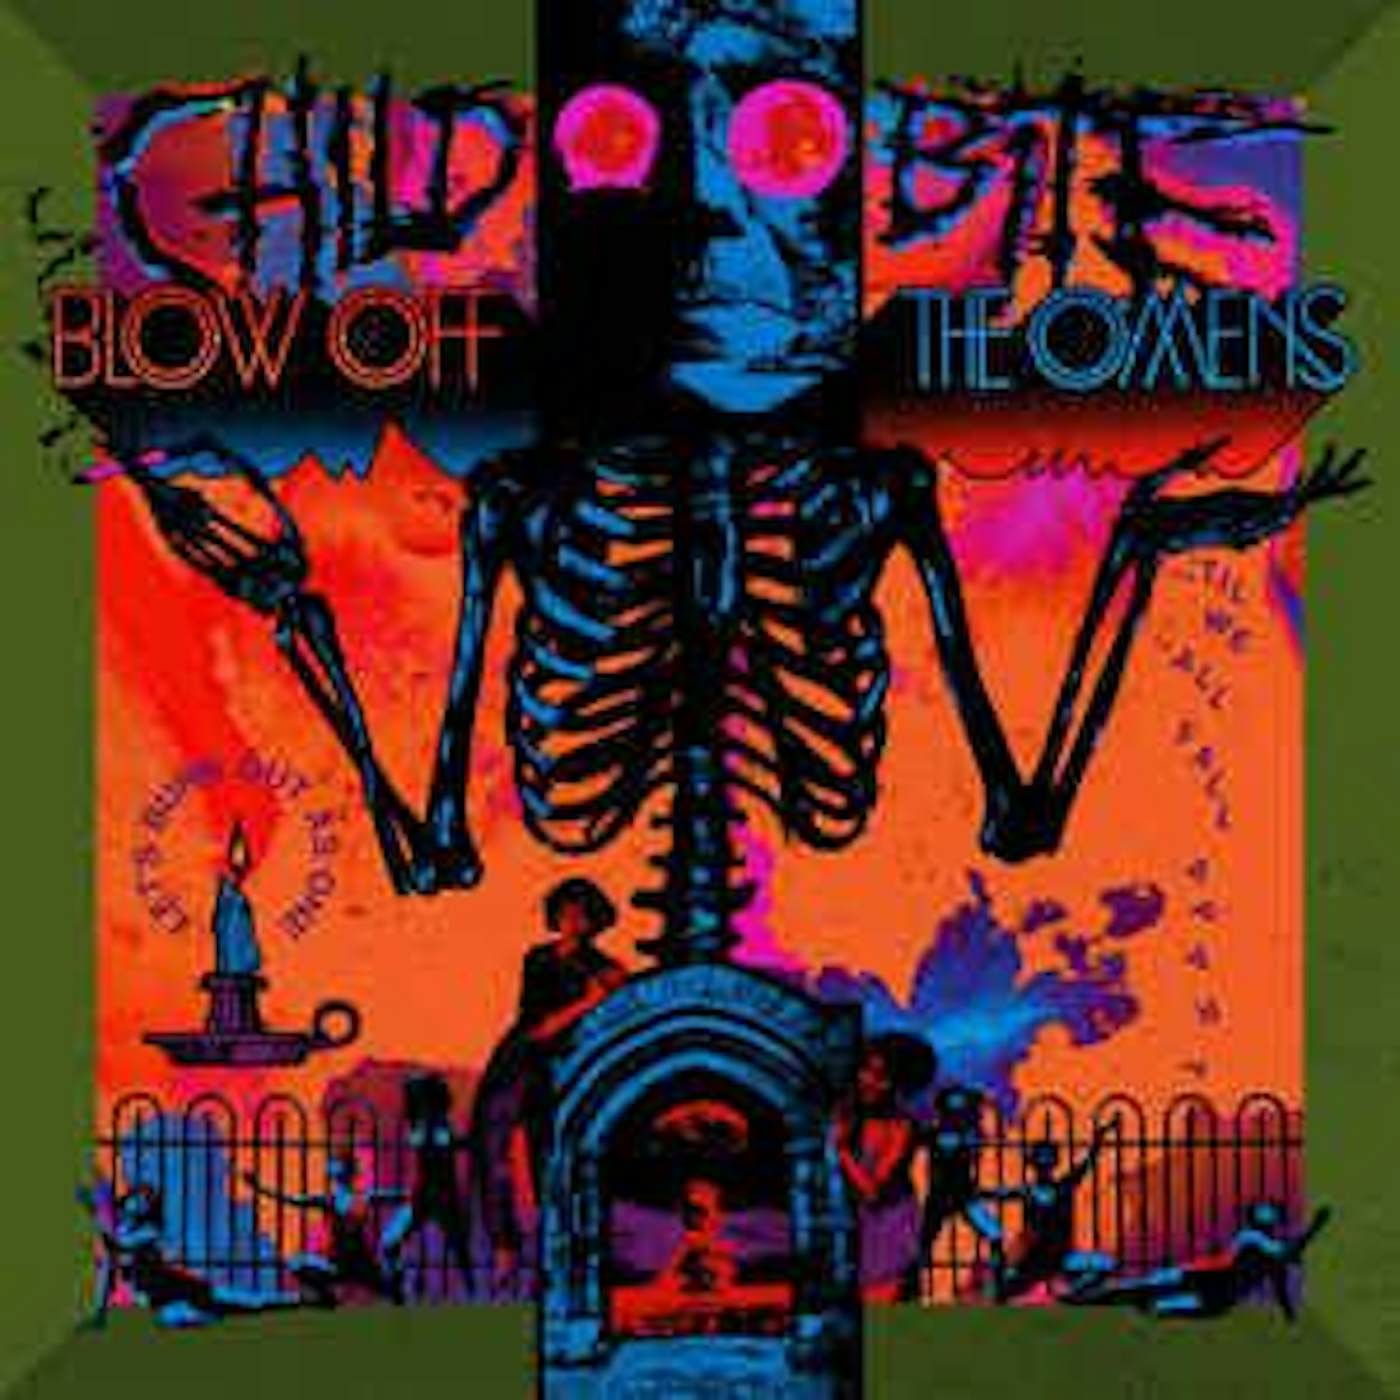 Child Bite Blow off the Omens Vinyl Record